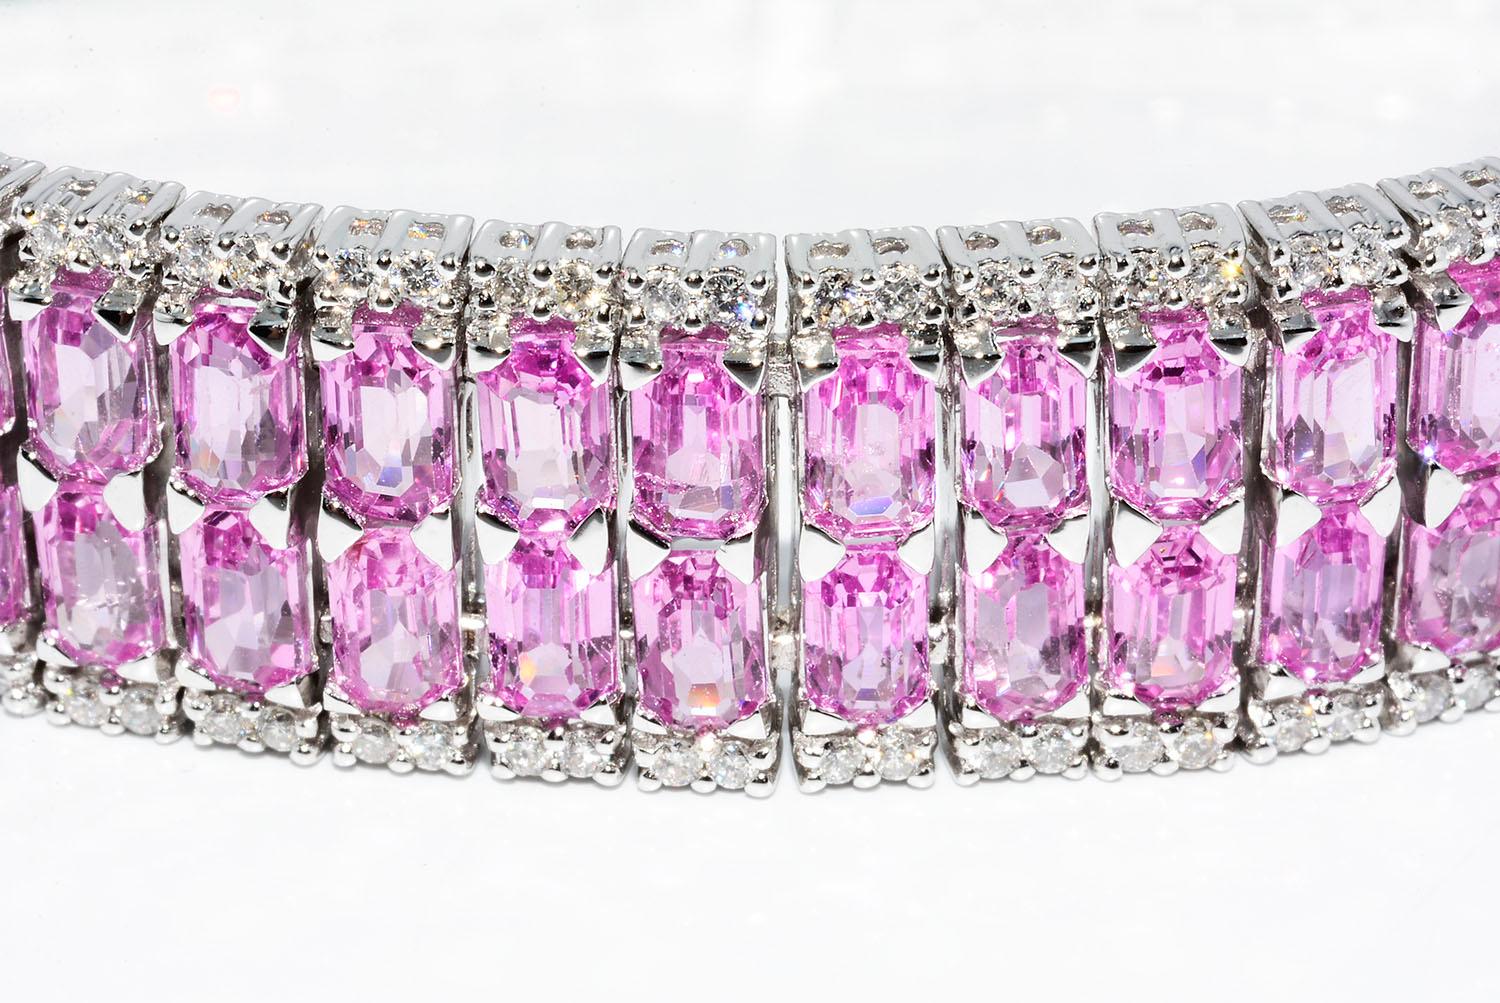 Emerald Cut Pink Sapphire and Diamond Bracelet 18k White Gold

Natural Emerald Cut Pink Sapphires 31.30 ct
Round Diamonds 1.60 ct G SI1
18k White Gold
Length 7 Inches